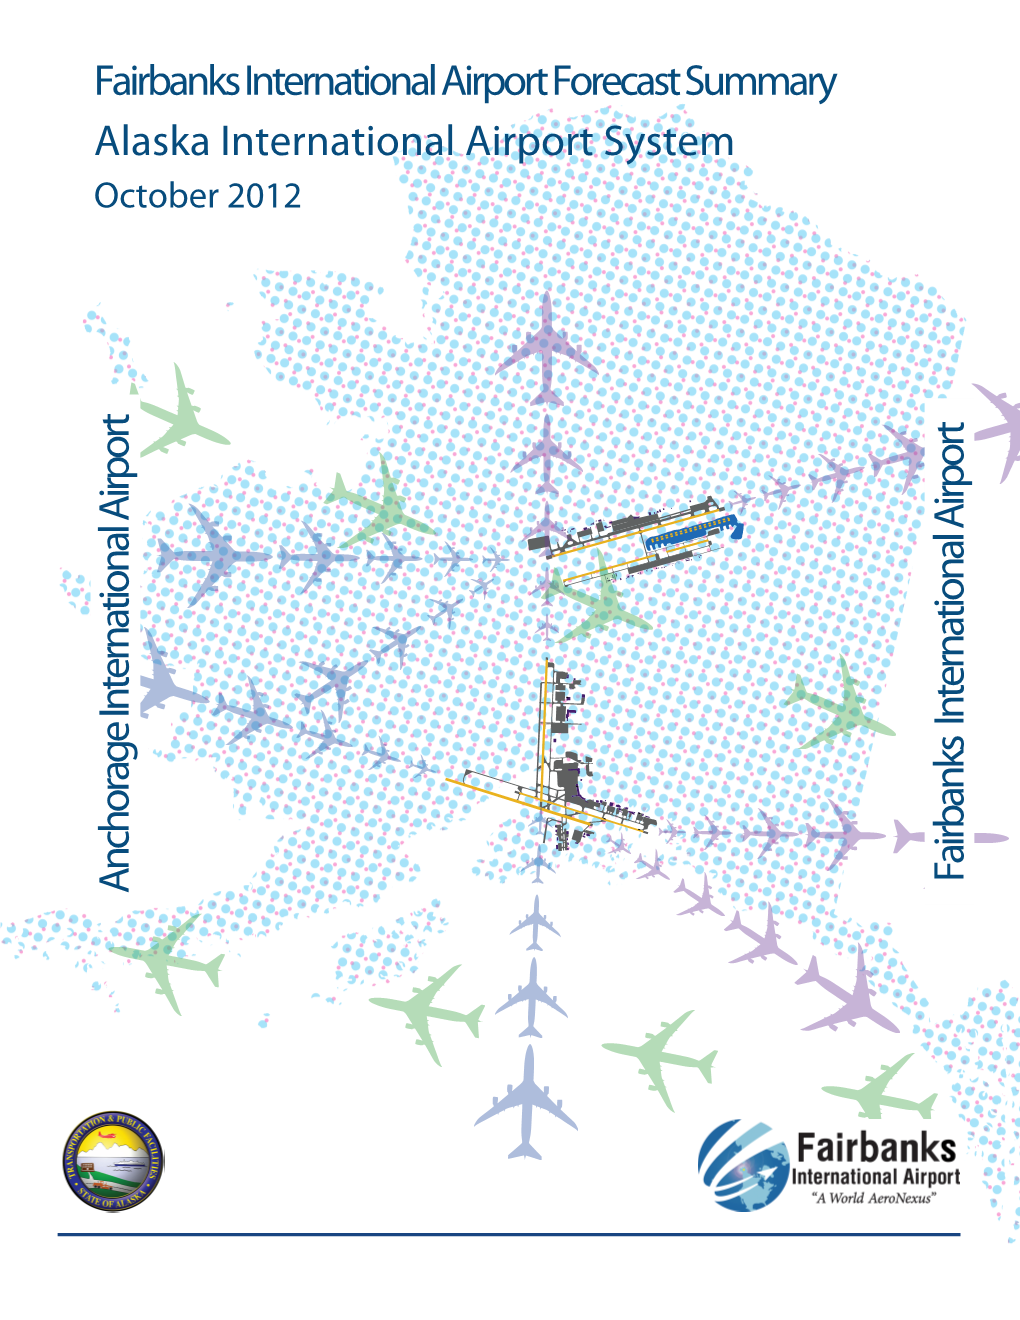 Alaska International Airport System – Fairbanks Forecast Summary